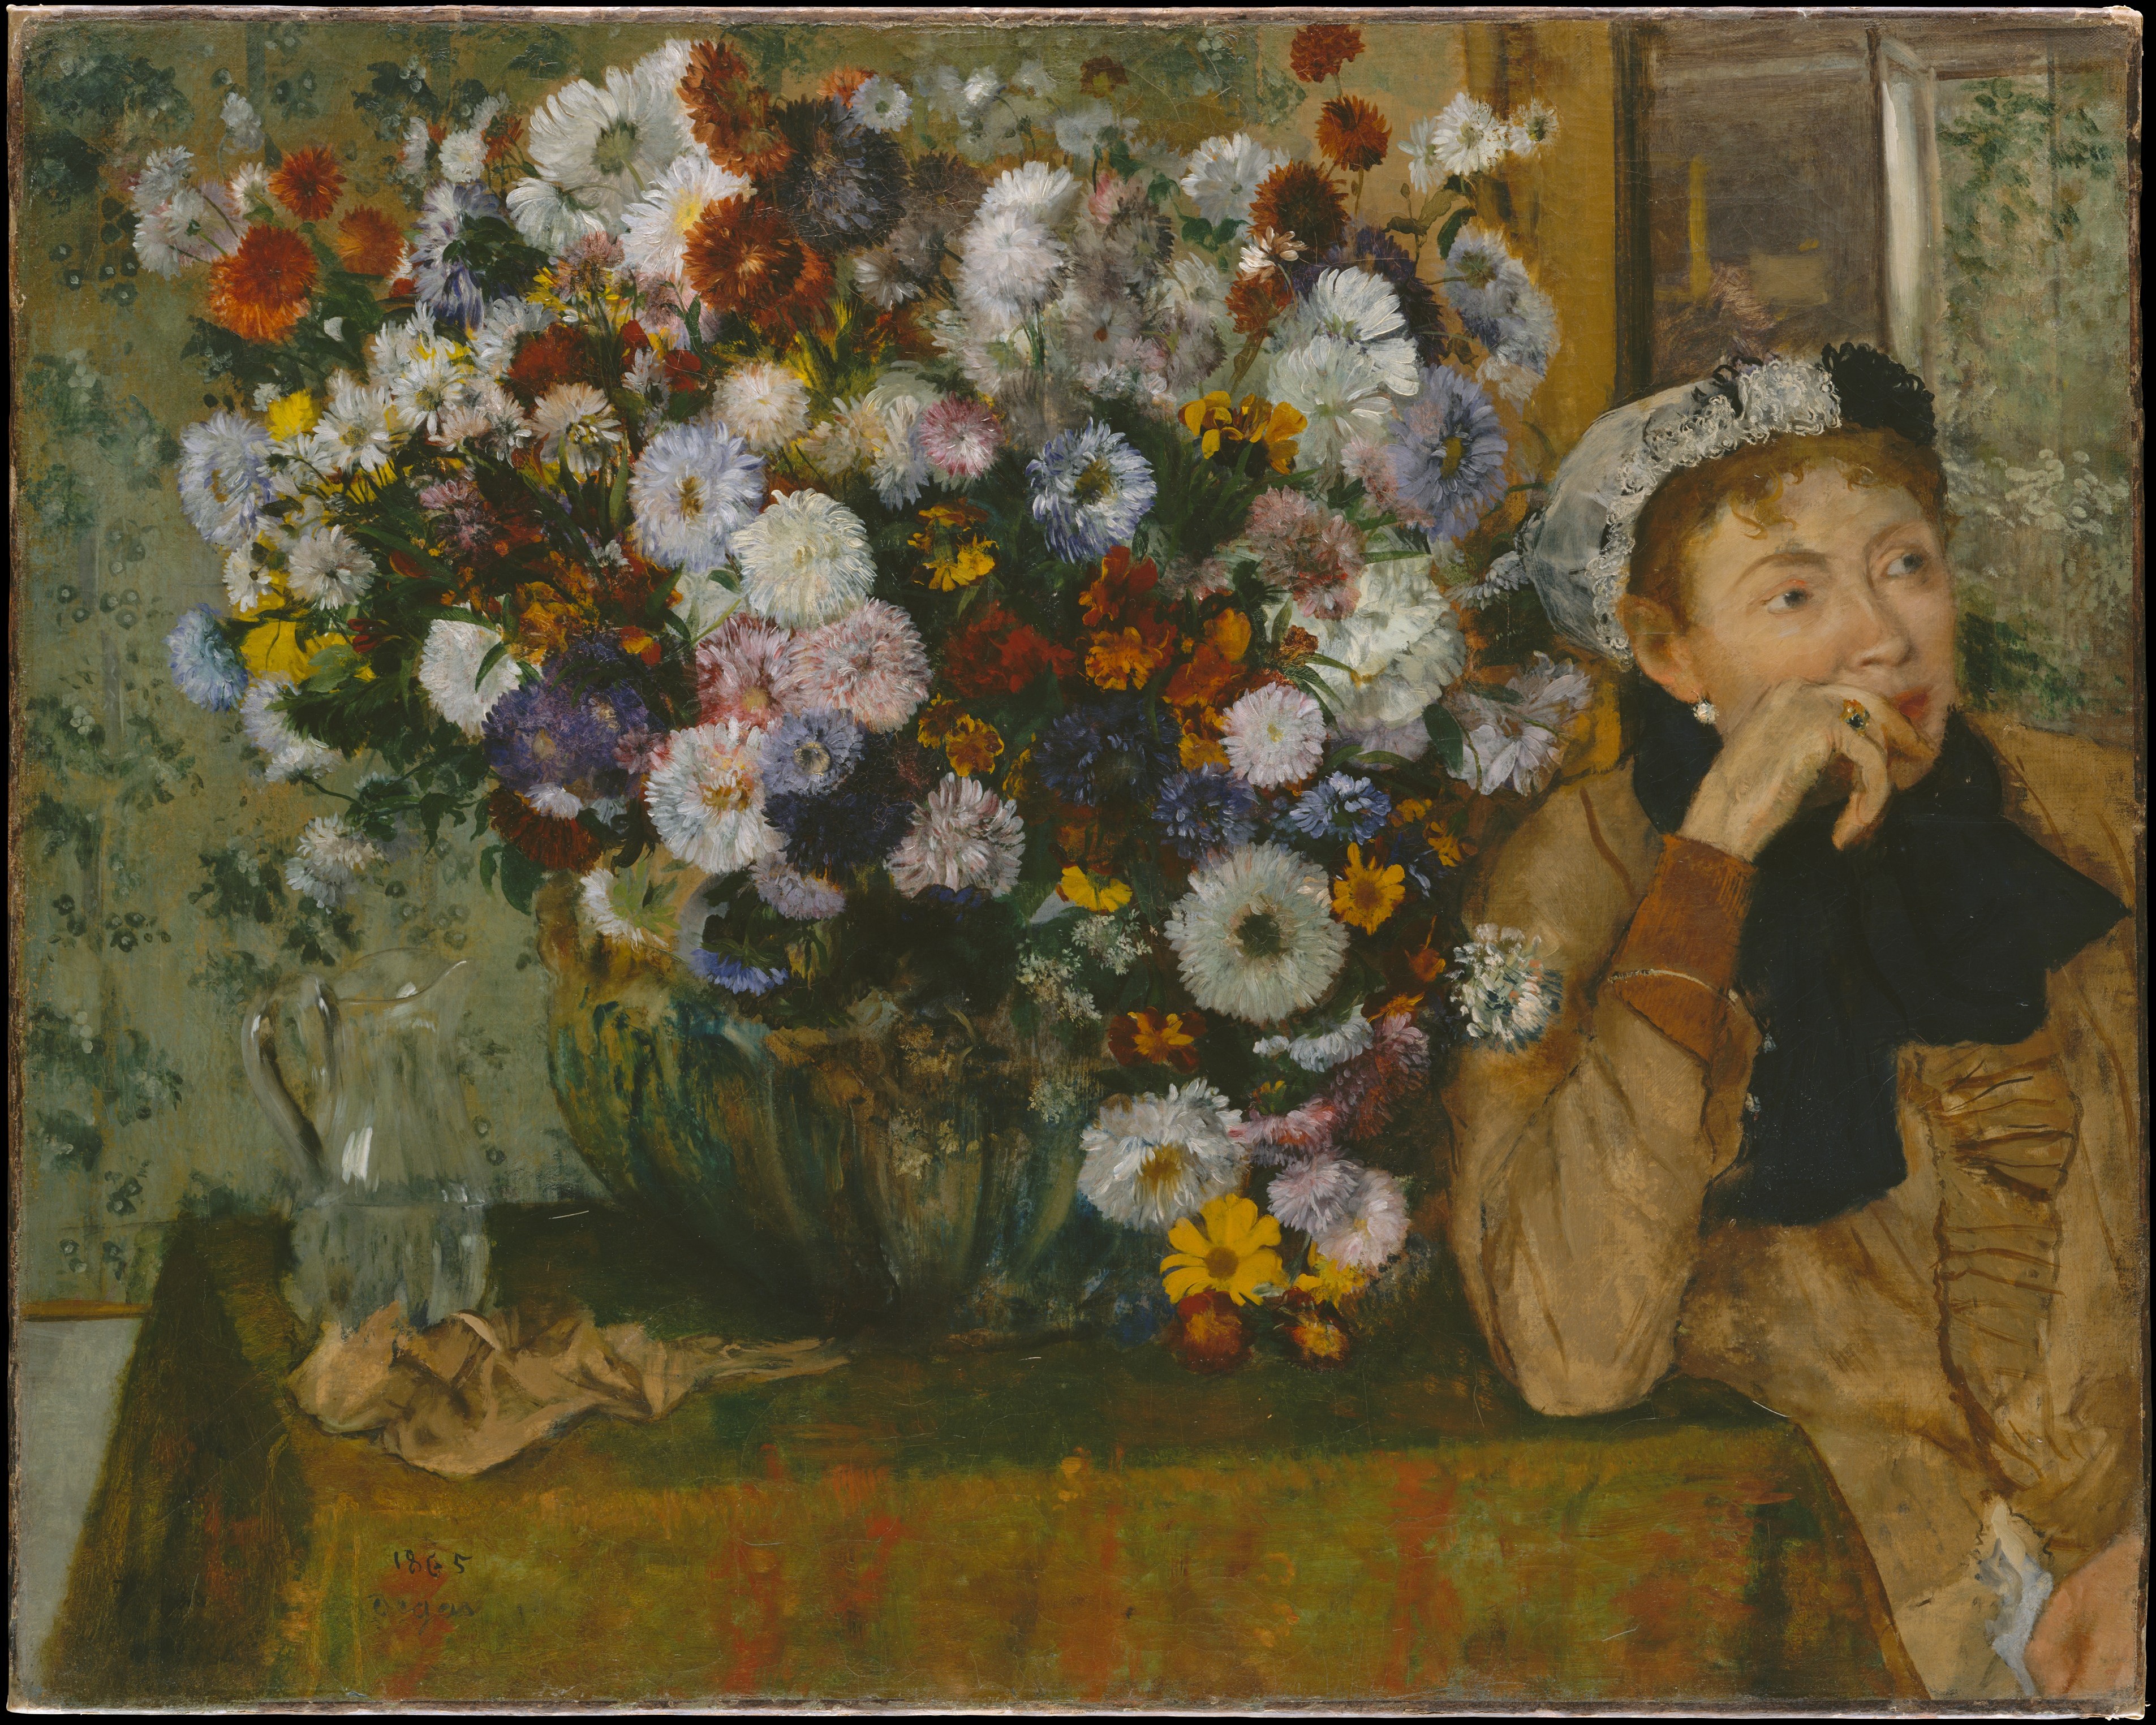 A Woman Seated beside a Vase of Flowers (Madame Paul Valpinçon?) by Edgar Degas - 1865 - 73.7 x 92.7 cm Metropolitan Museum of Art